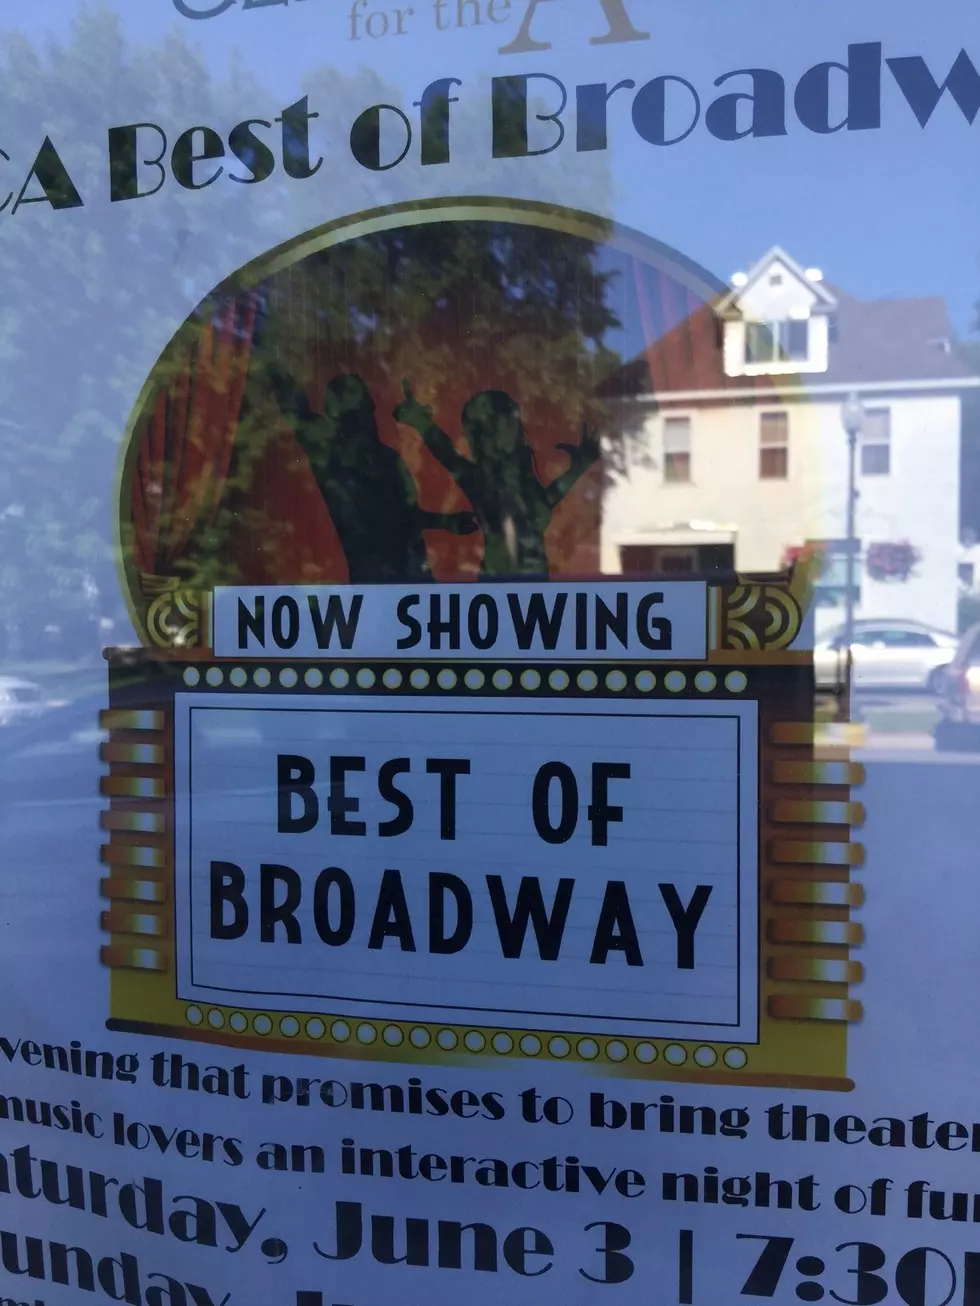 Best of Broadway Show Details on AM Minnesota